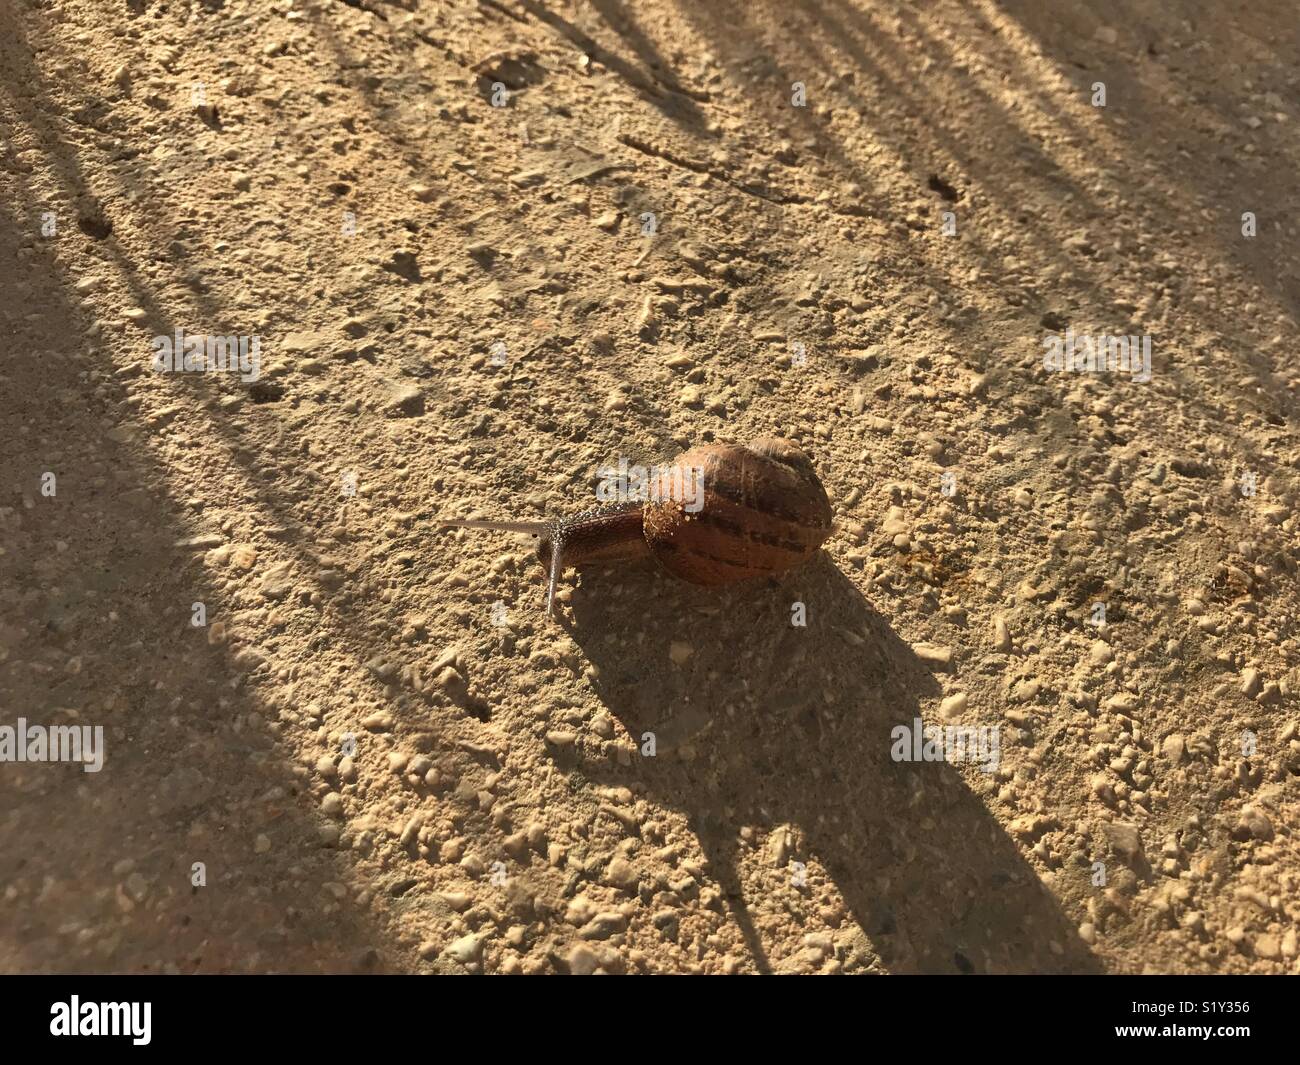 A snail enjoying the sun Stock Photo